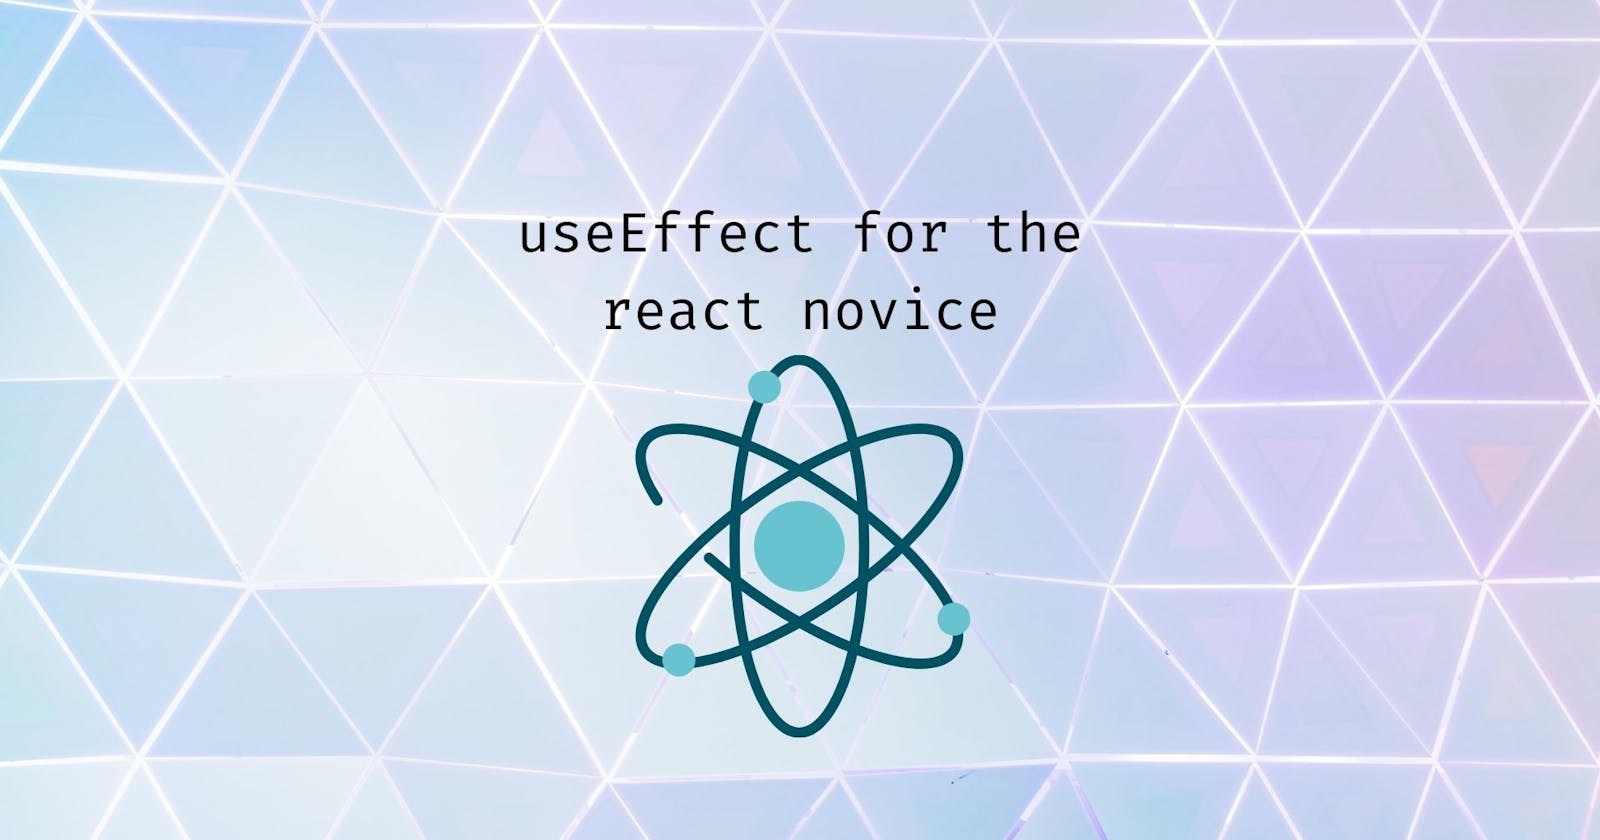 React Hooks like am 5-ish: useEffect!